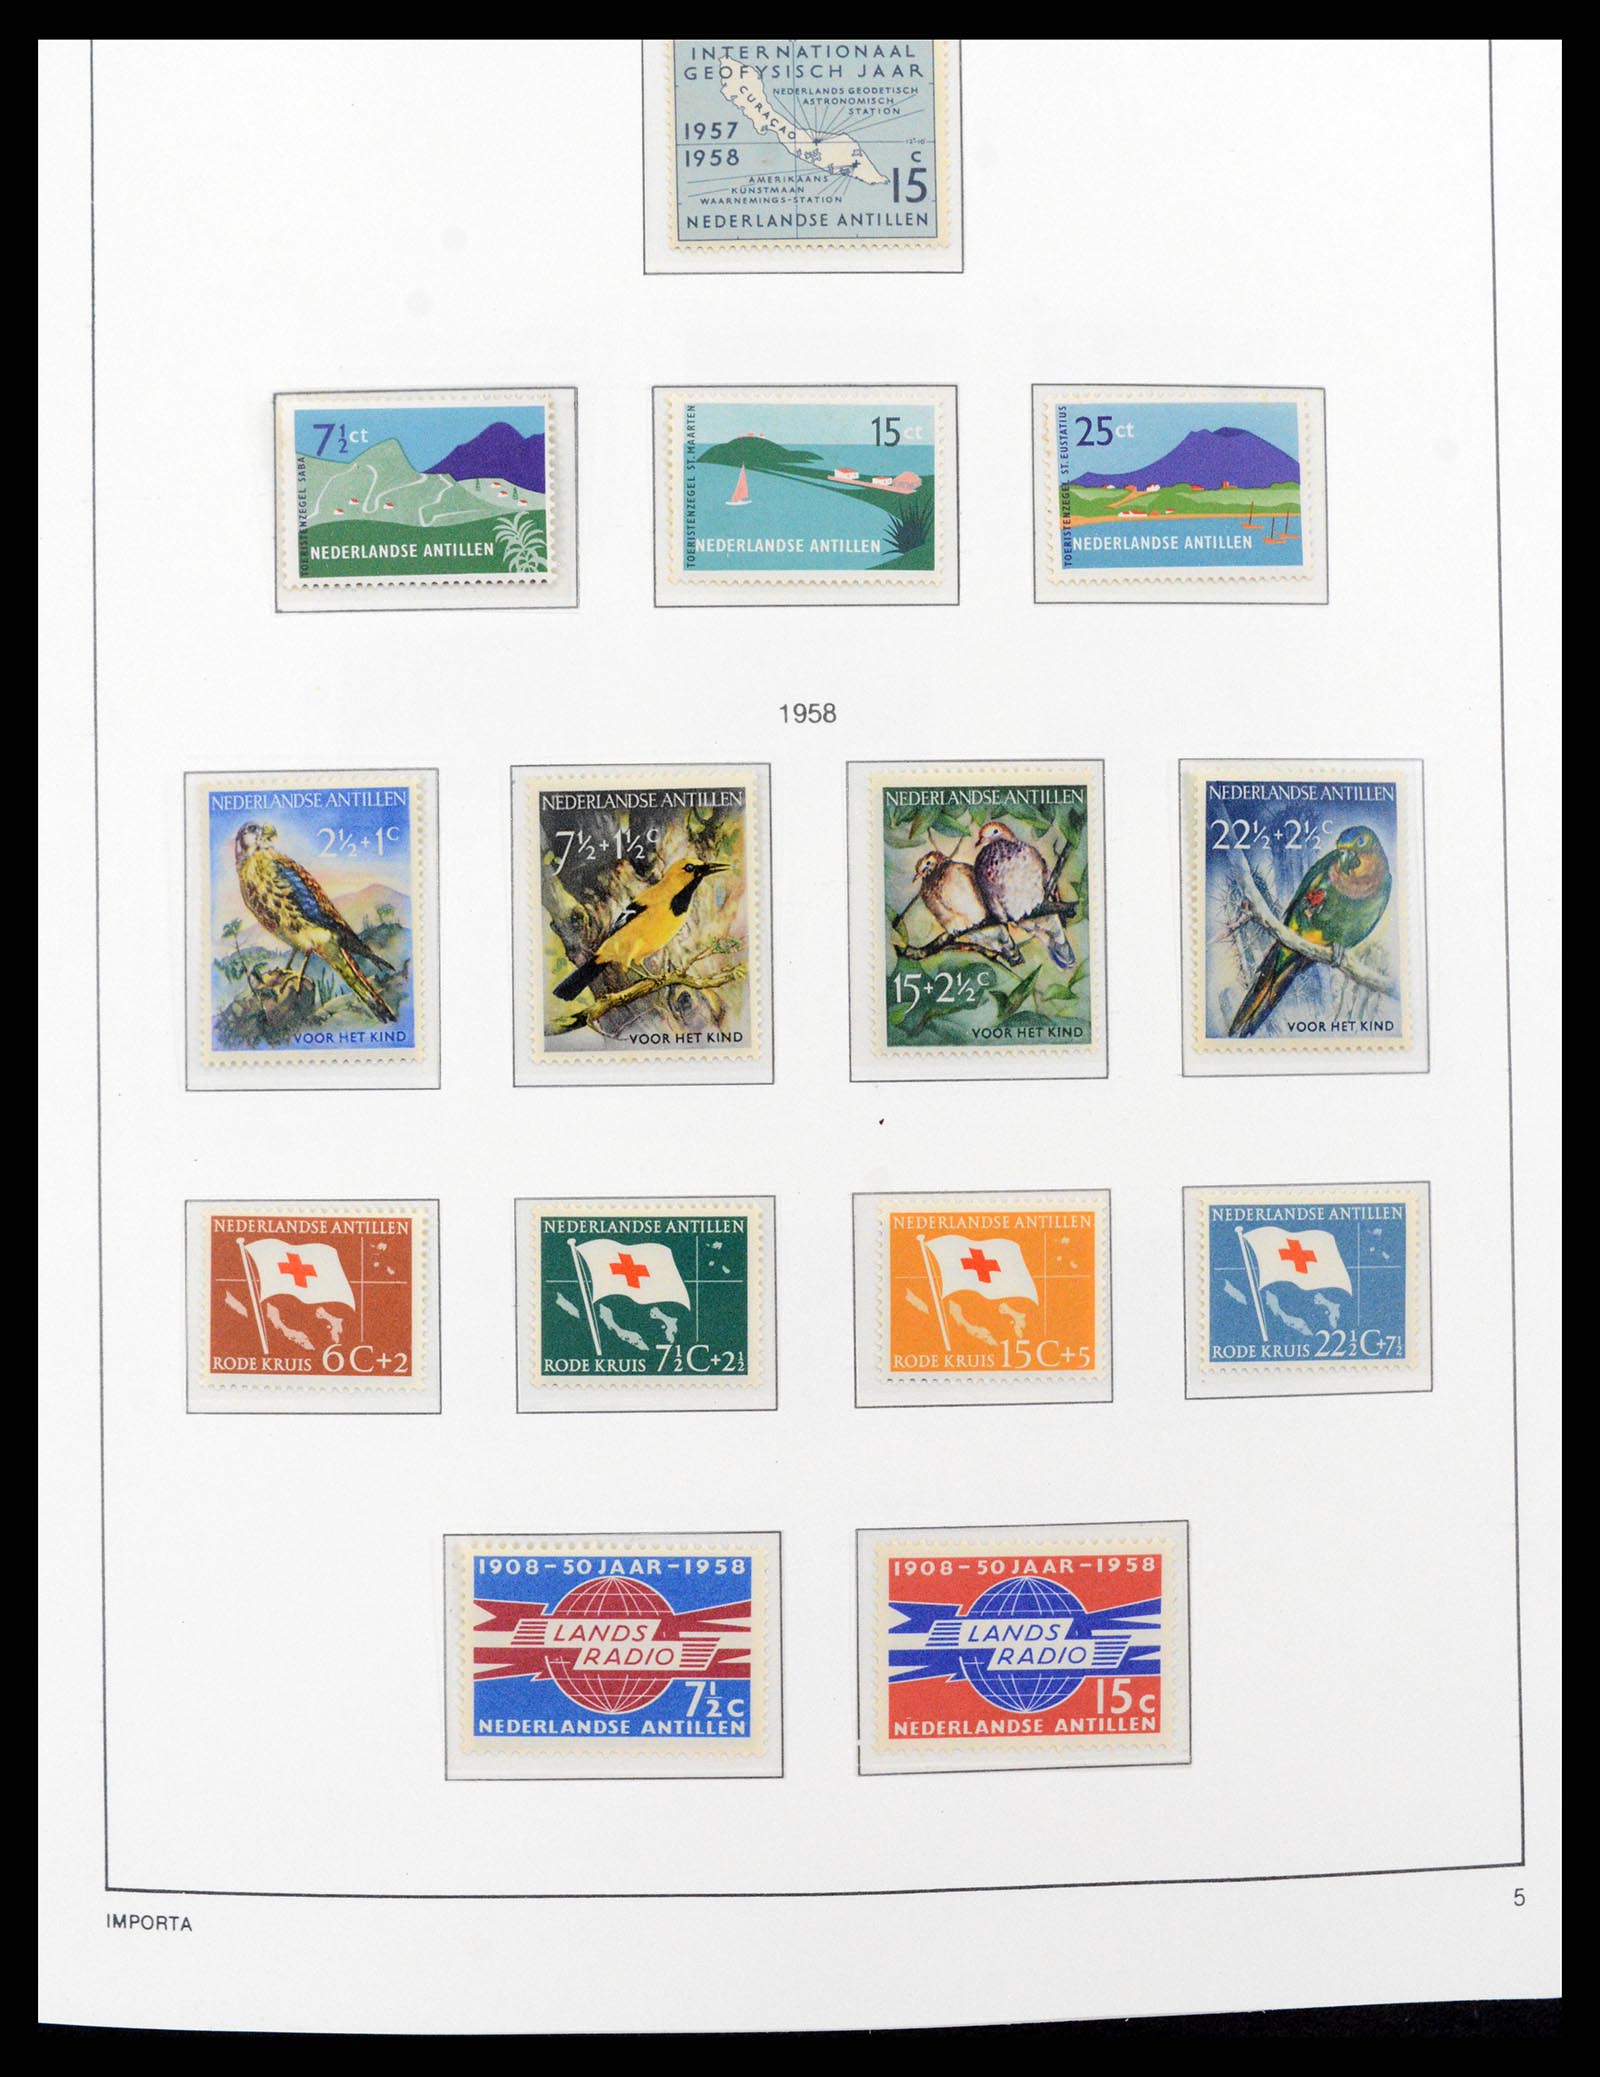 37693 005 - Stamp collection 37693 Netherlands Antilles 1949-2001.